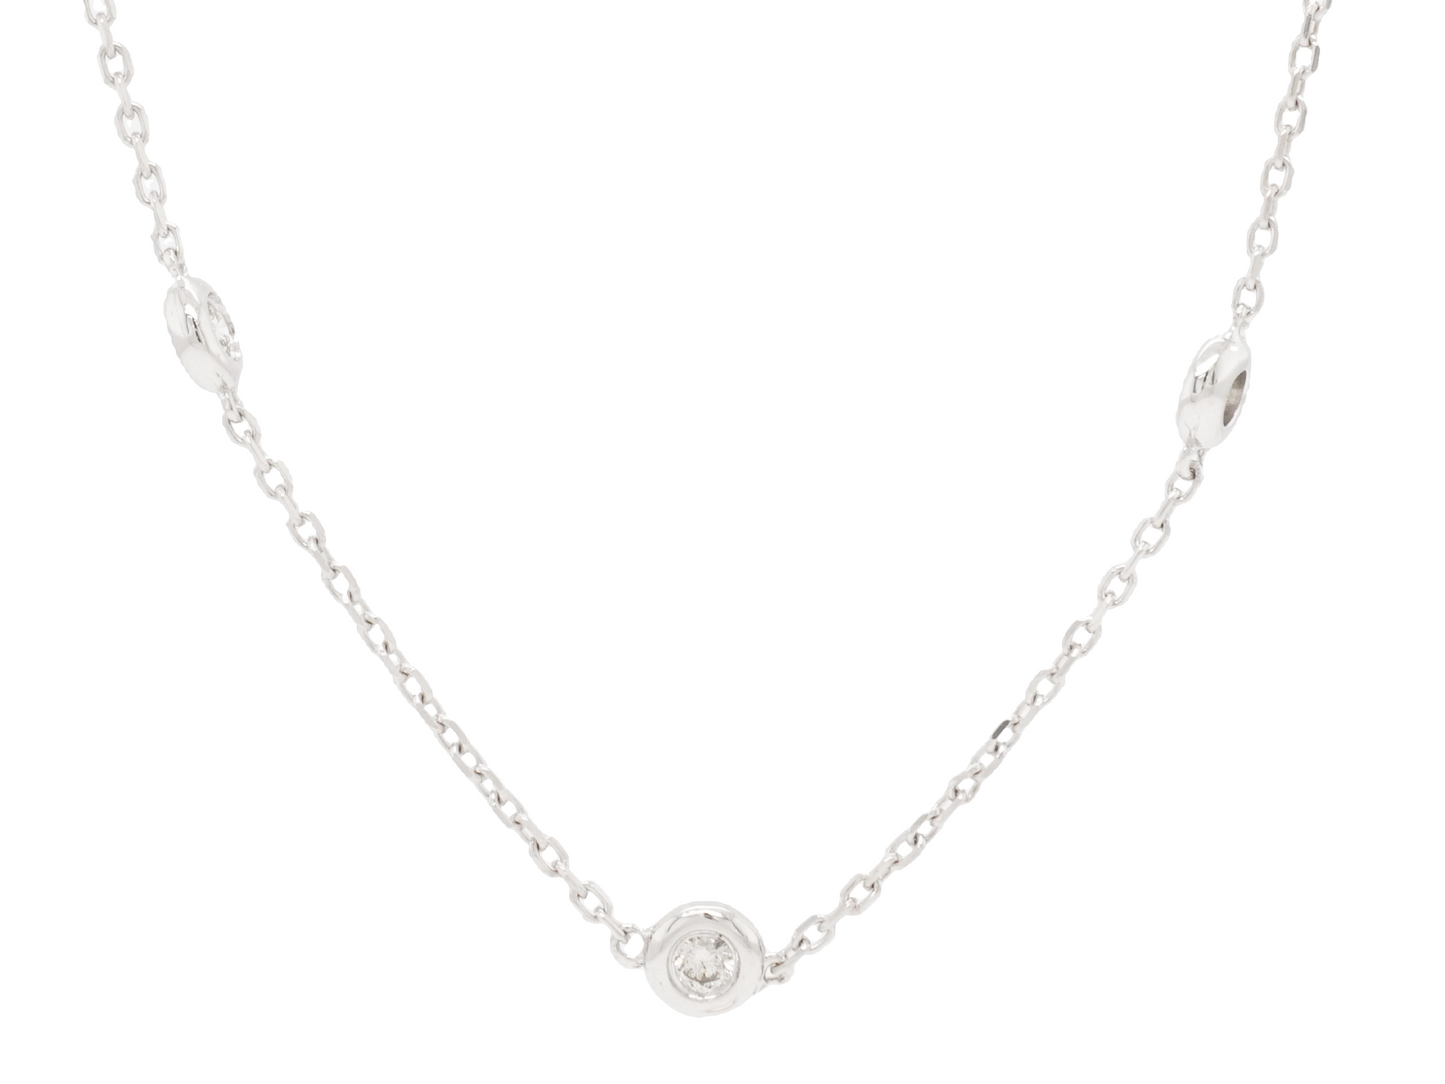 .16 Carat Bezel Set Diamond Necklace in 14K White Gold